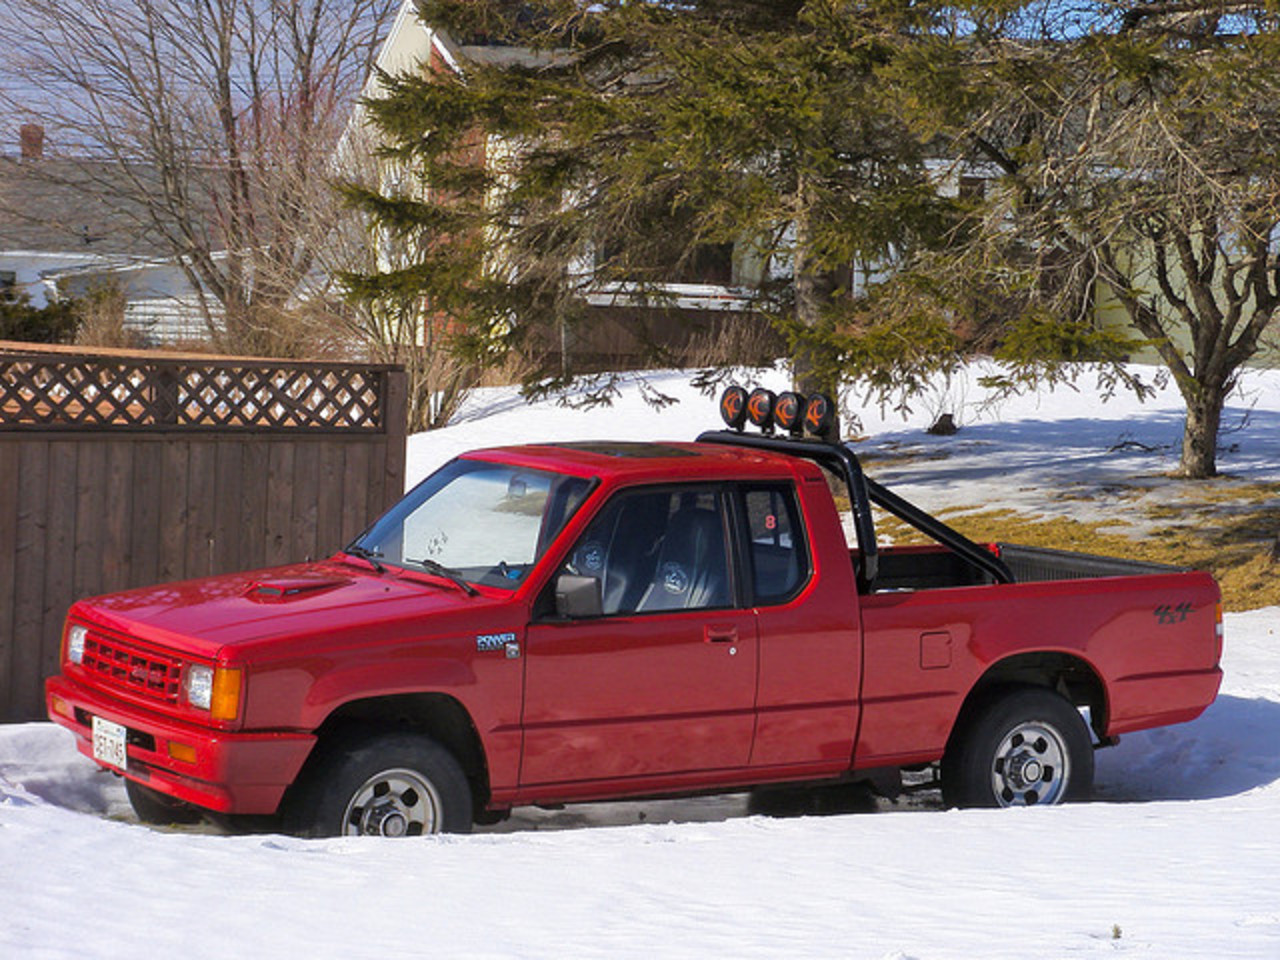 Dodge Ram 50 | Flickr - Photo Sharing!